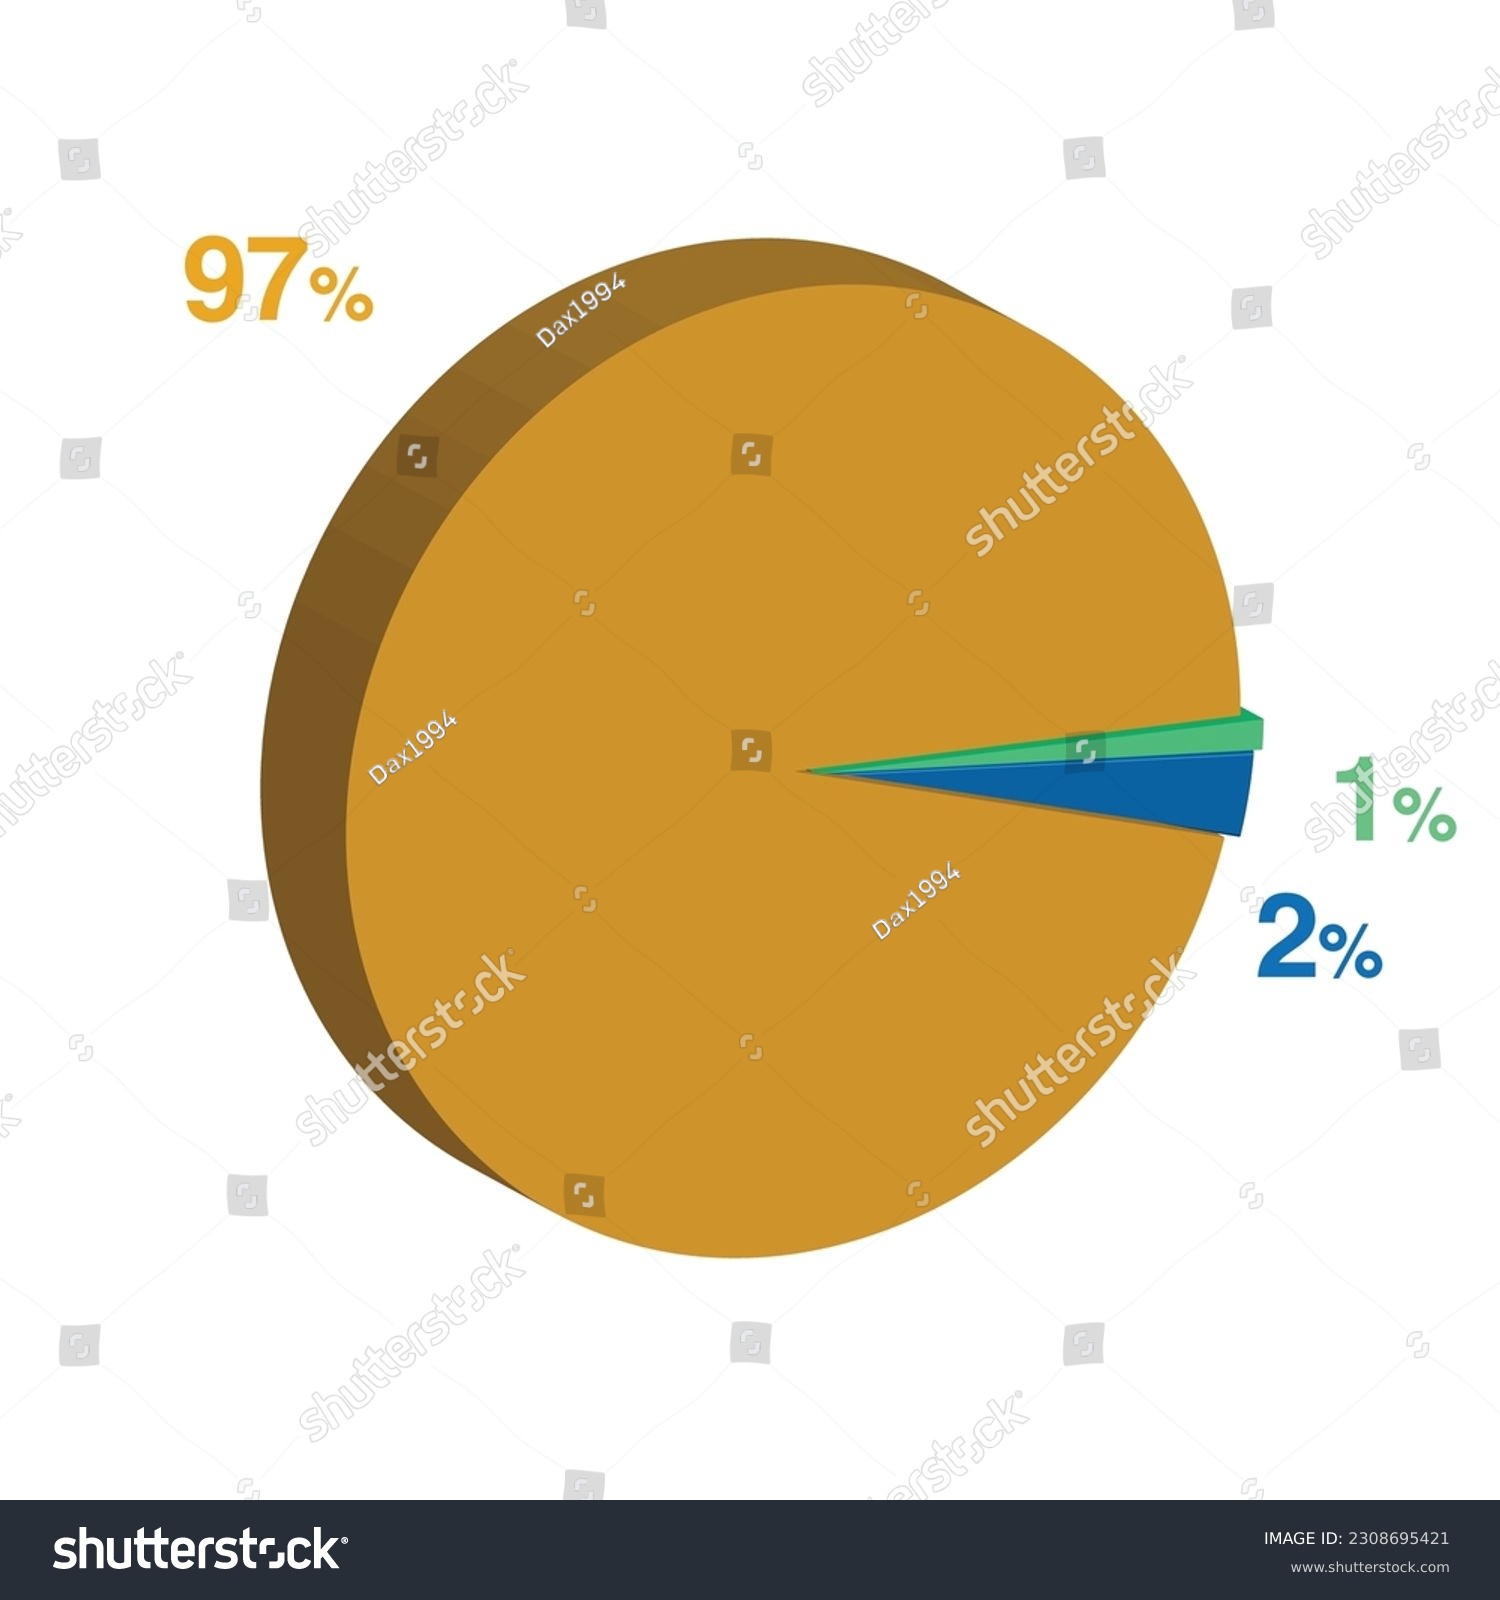 SVG of 1 2 97 percent 3d Isometric 3 part pie chart diagram for business presentation. Vector infographics illustration eps. svg